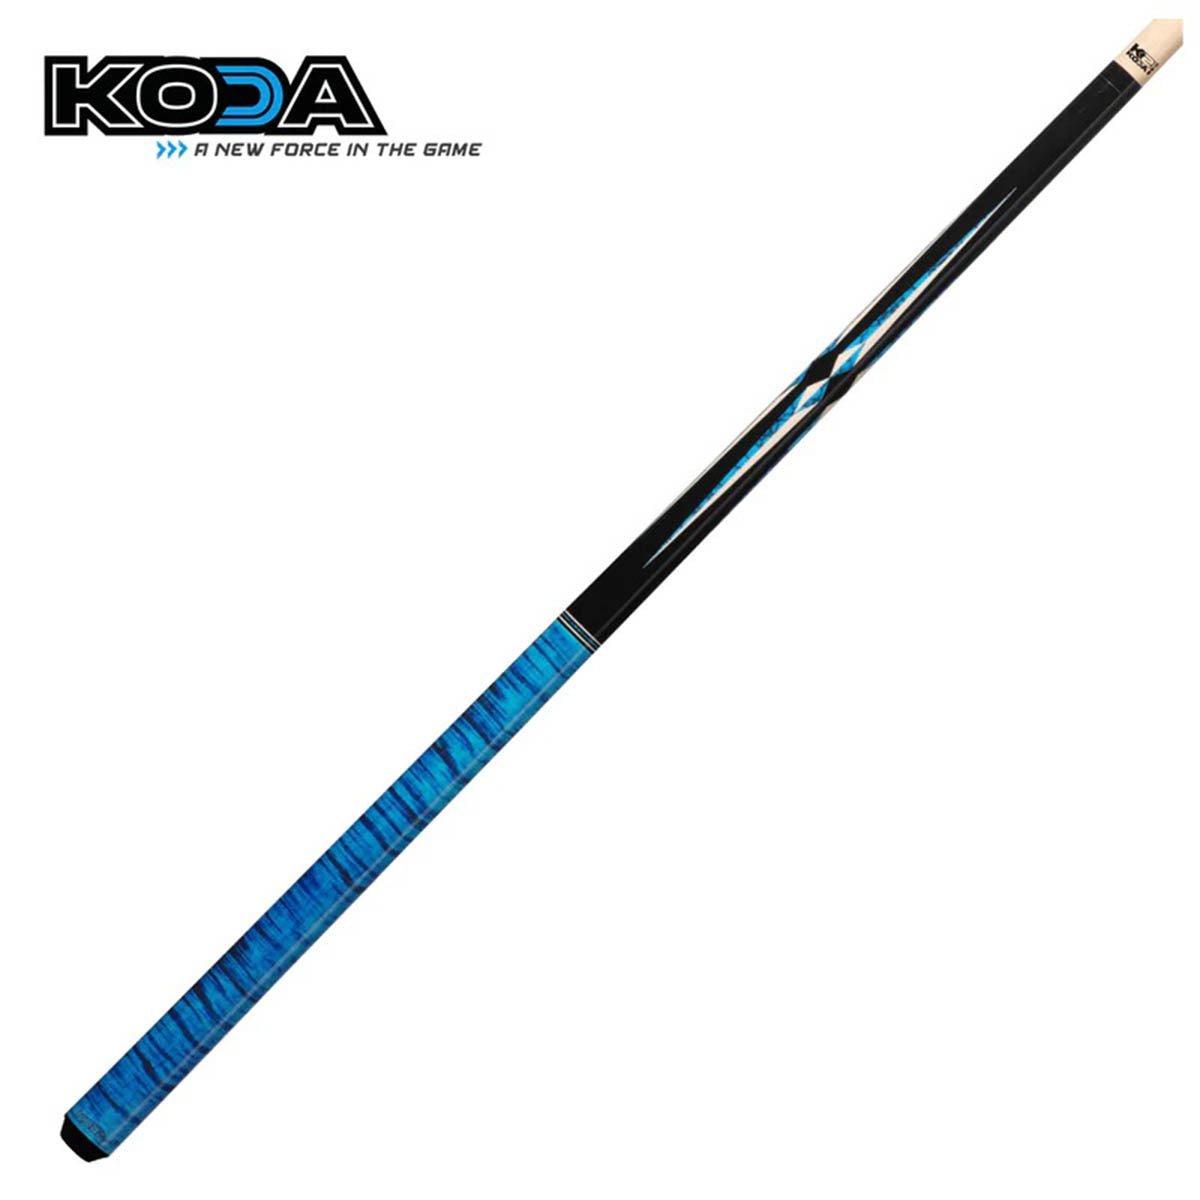 Koda K2 KL141 - BilliardCuesOnline | Singapore pool, snooker and billiard retail and wholesaler